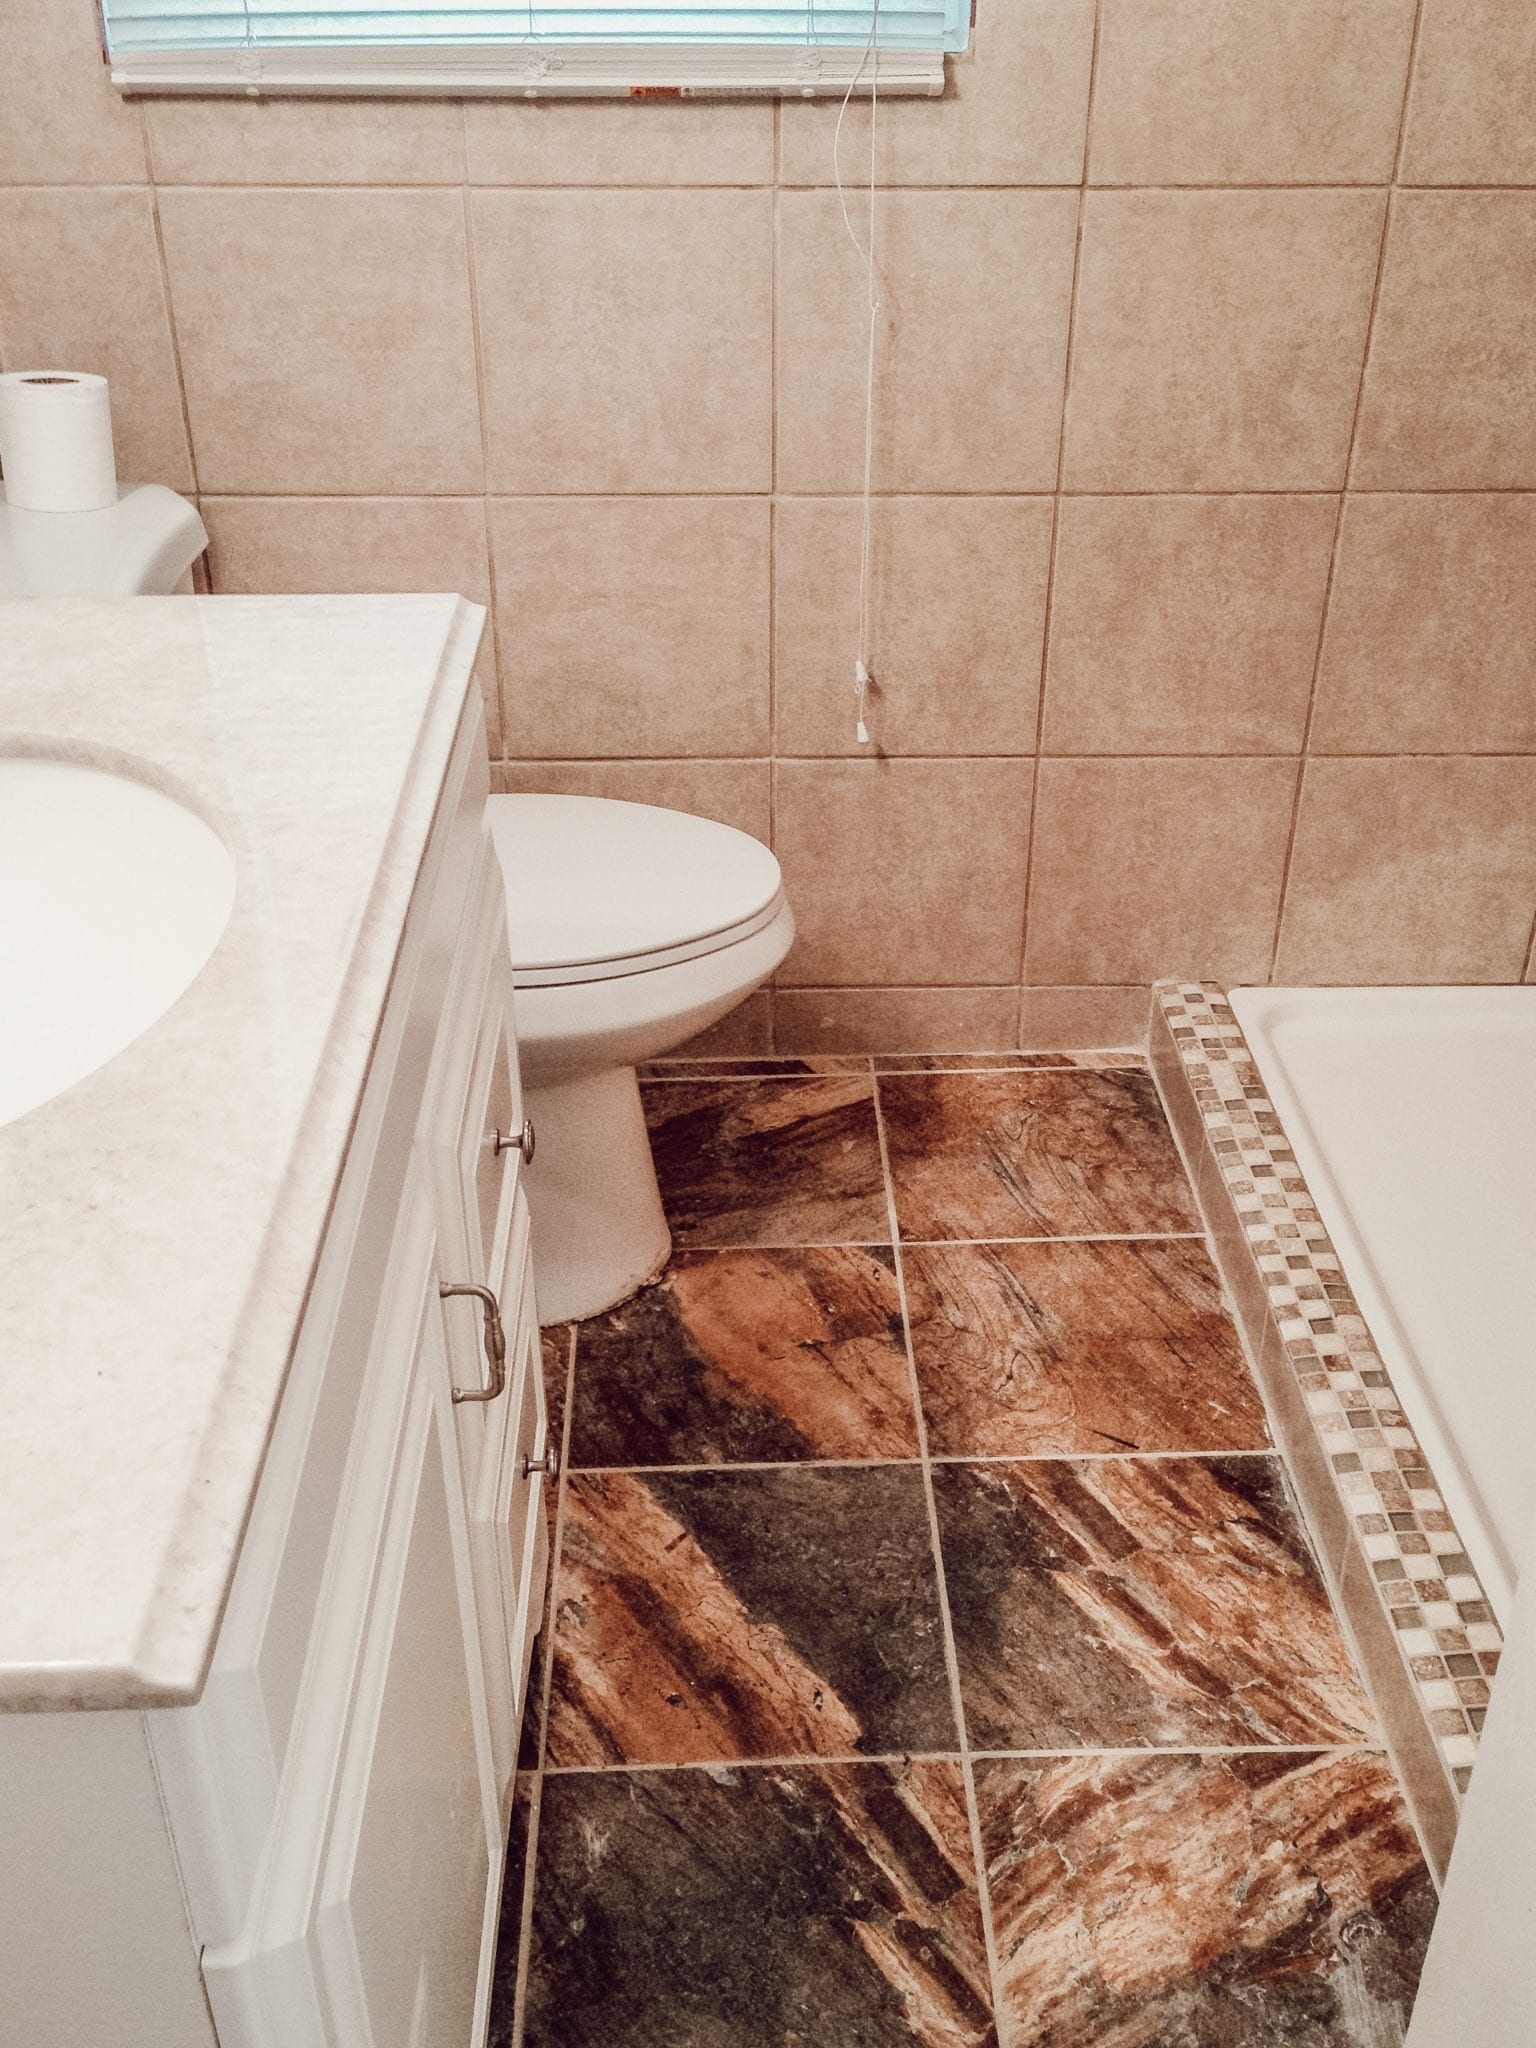 new granite floor tiles in bathroom